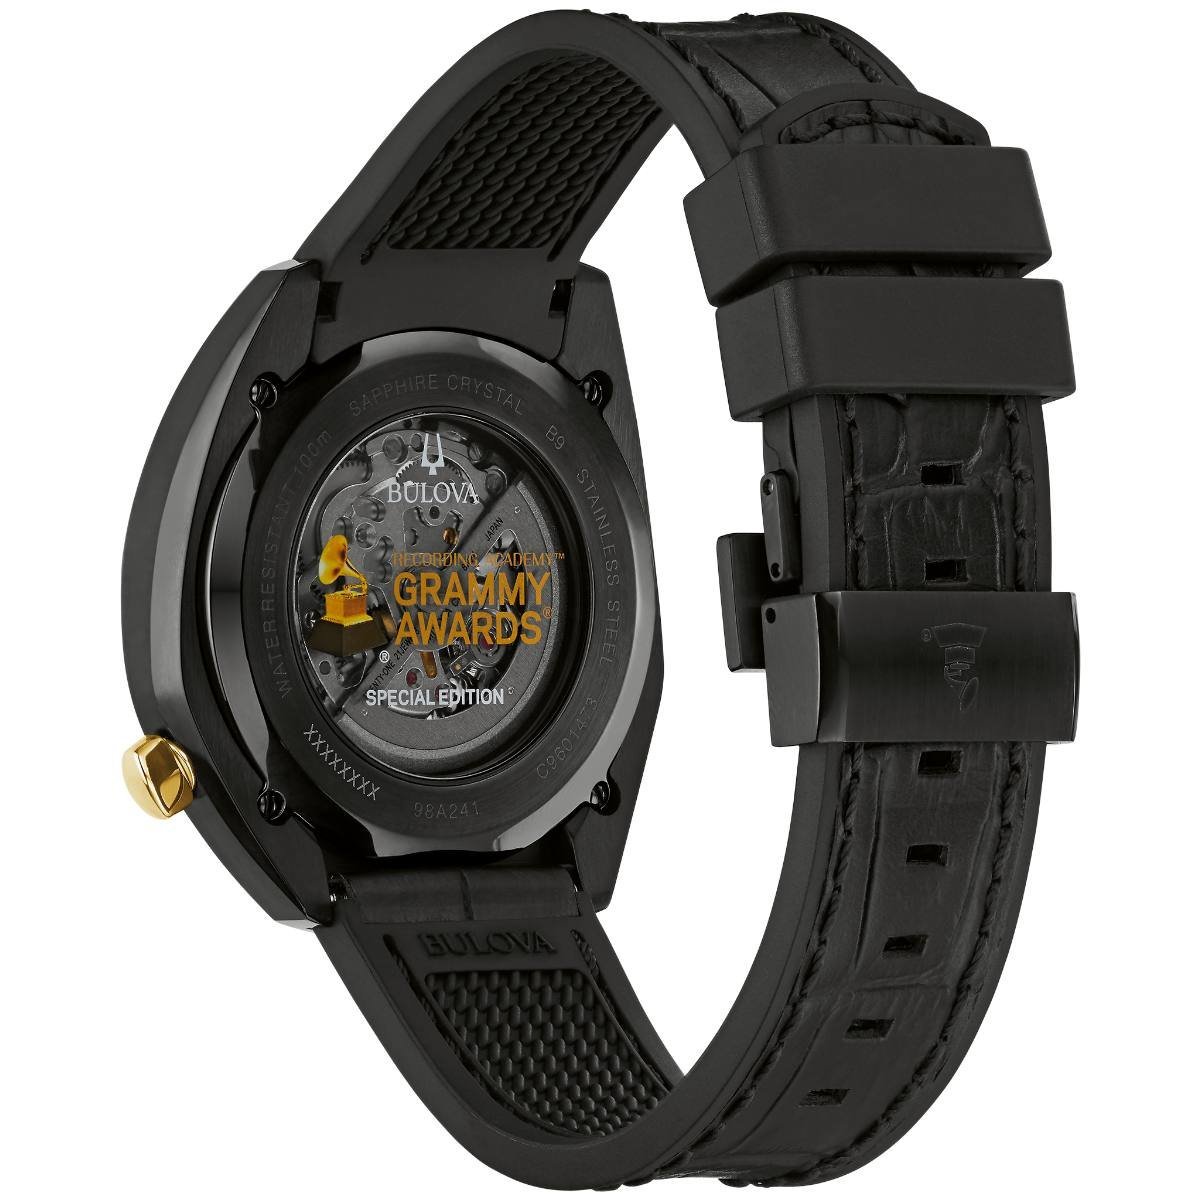 Reloj para Caballero Color Negro Bulova